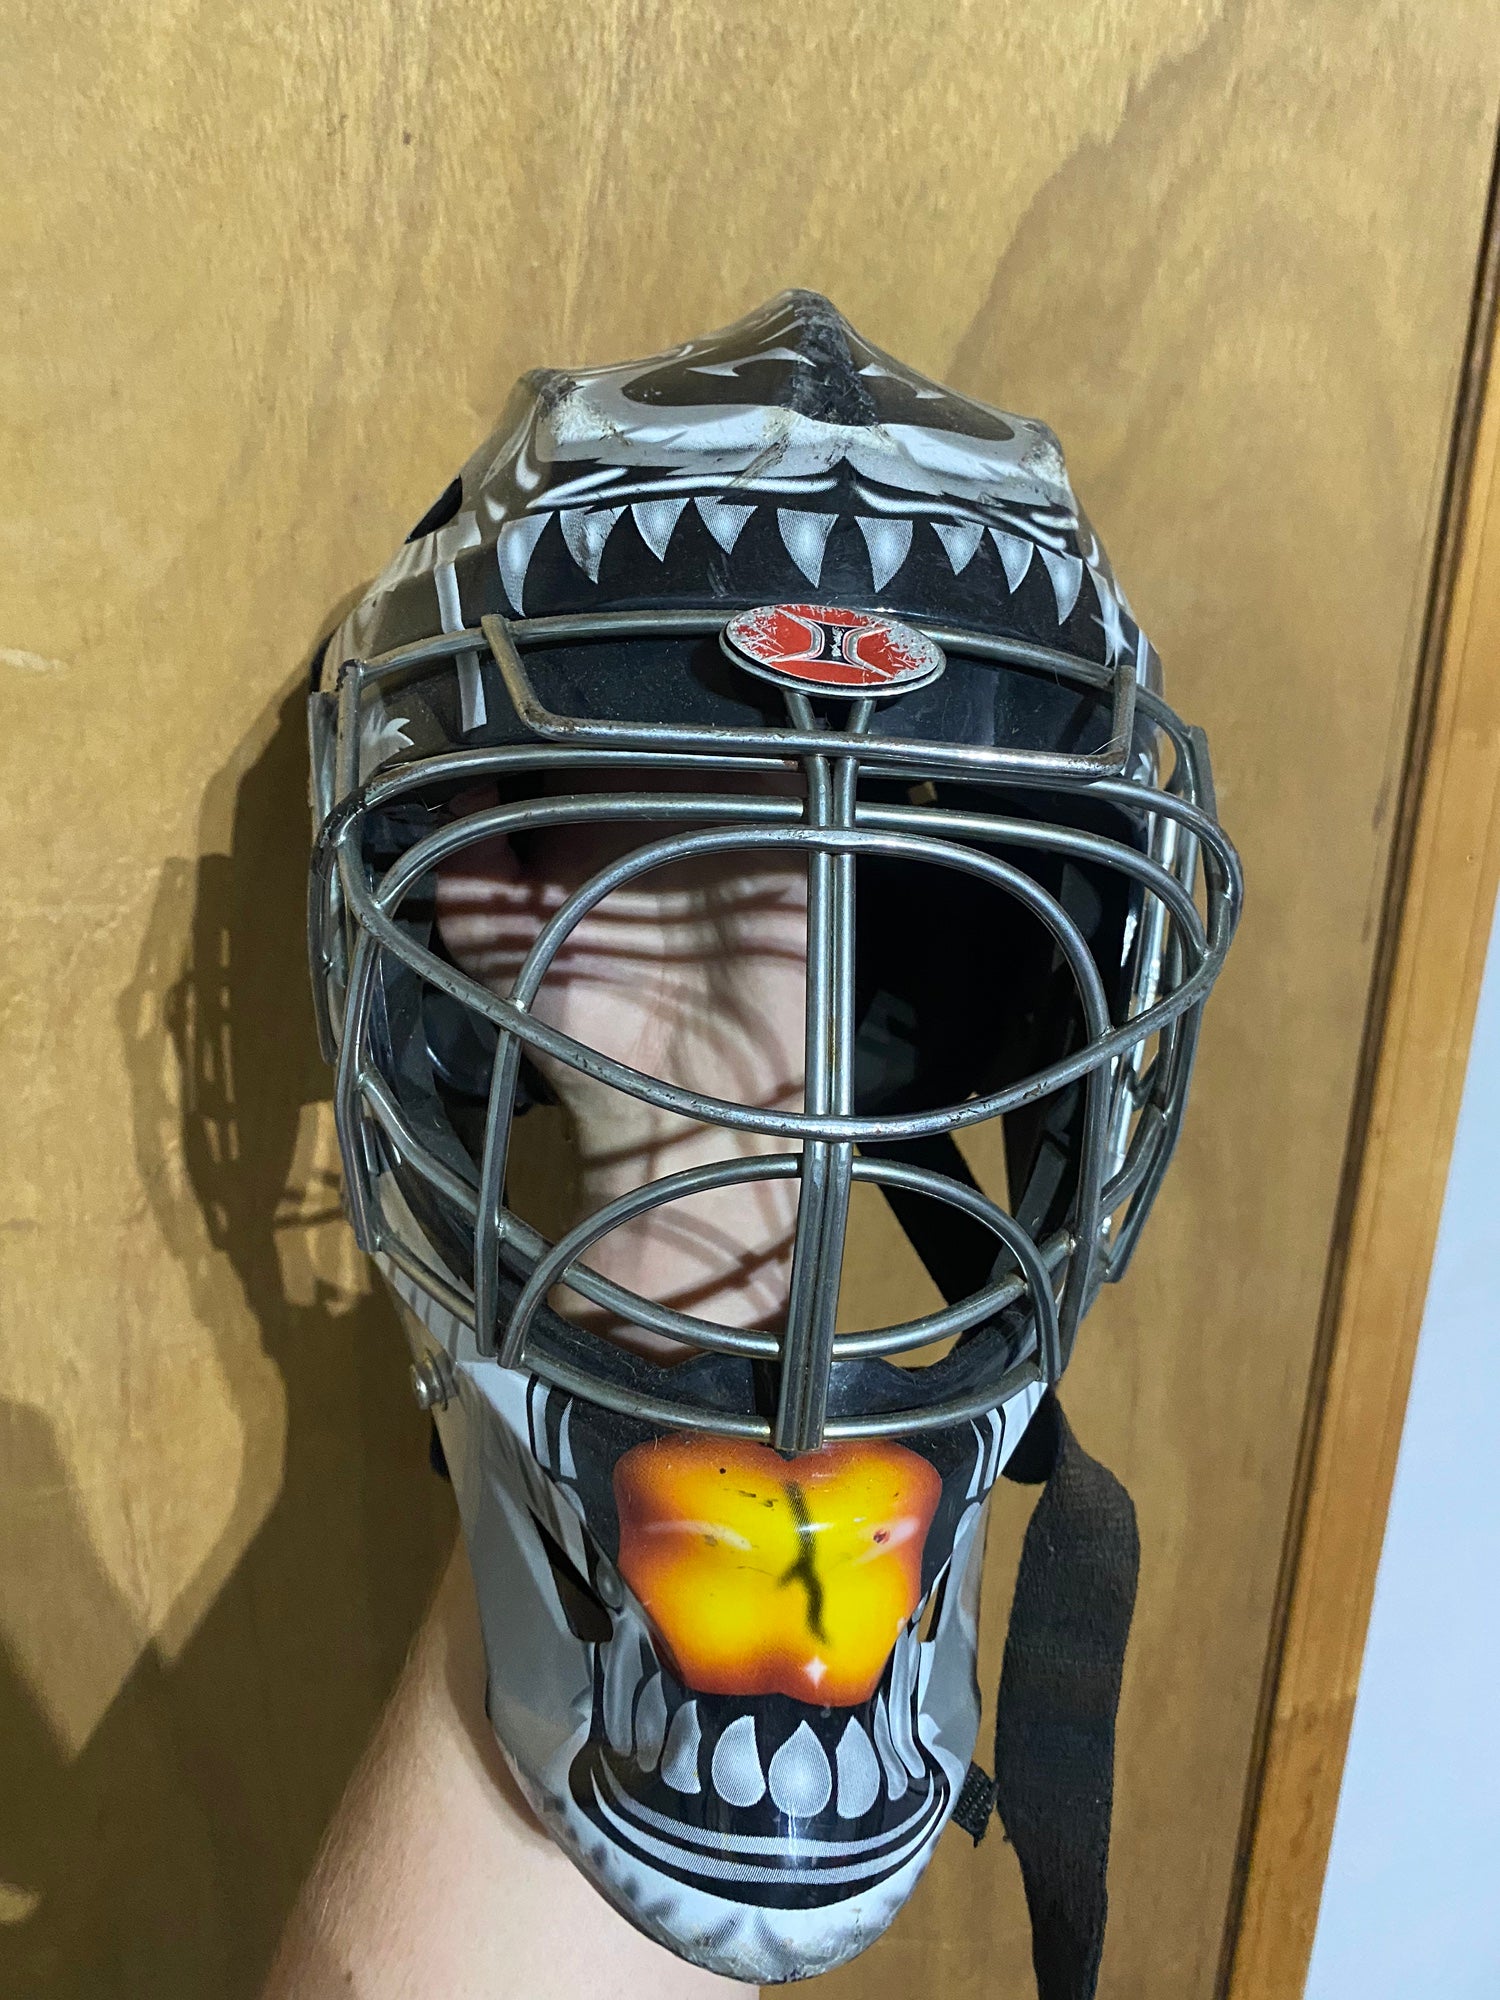 Mighty Ducks Street Hockey Goalie Mask